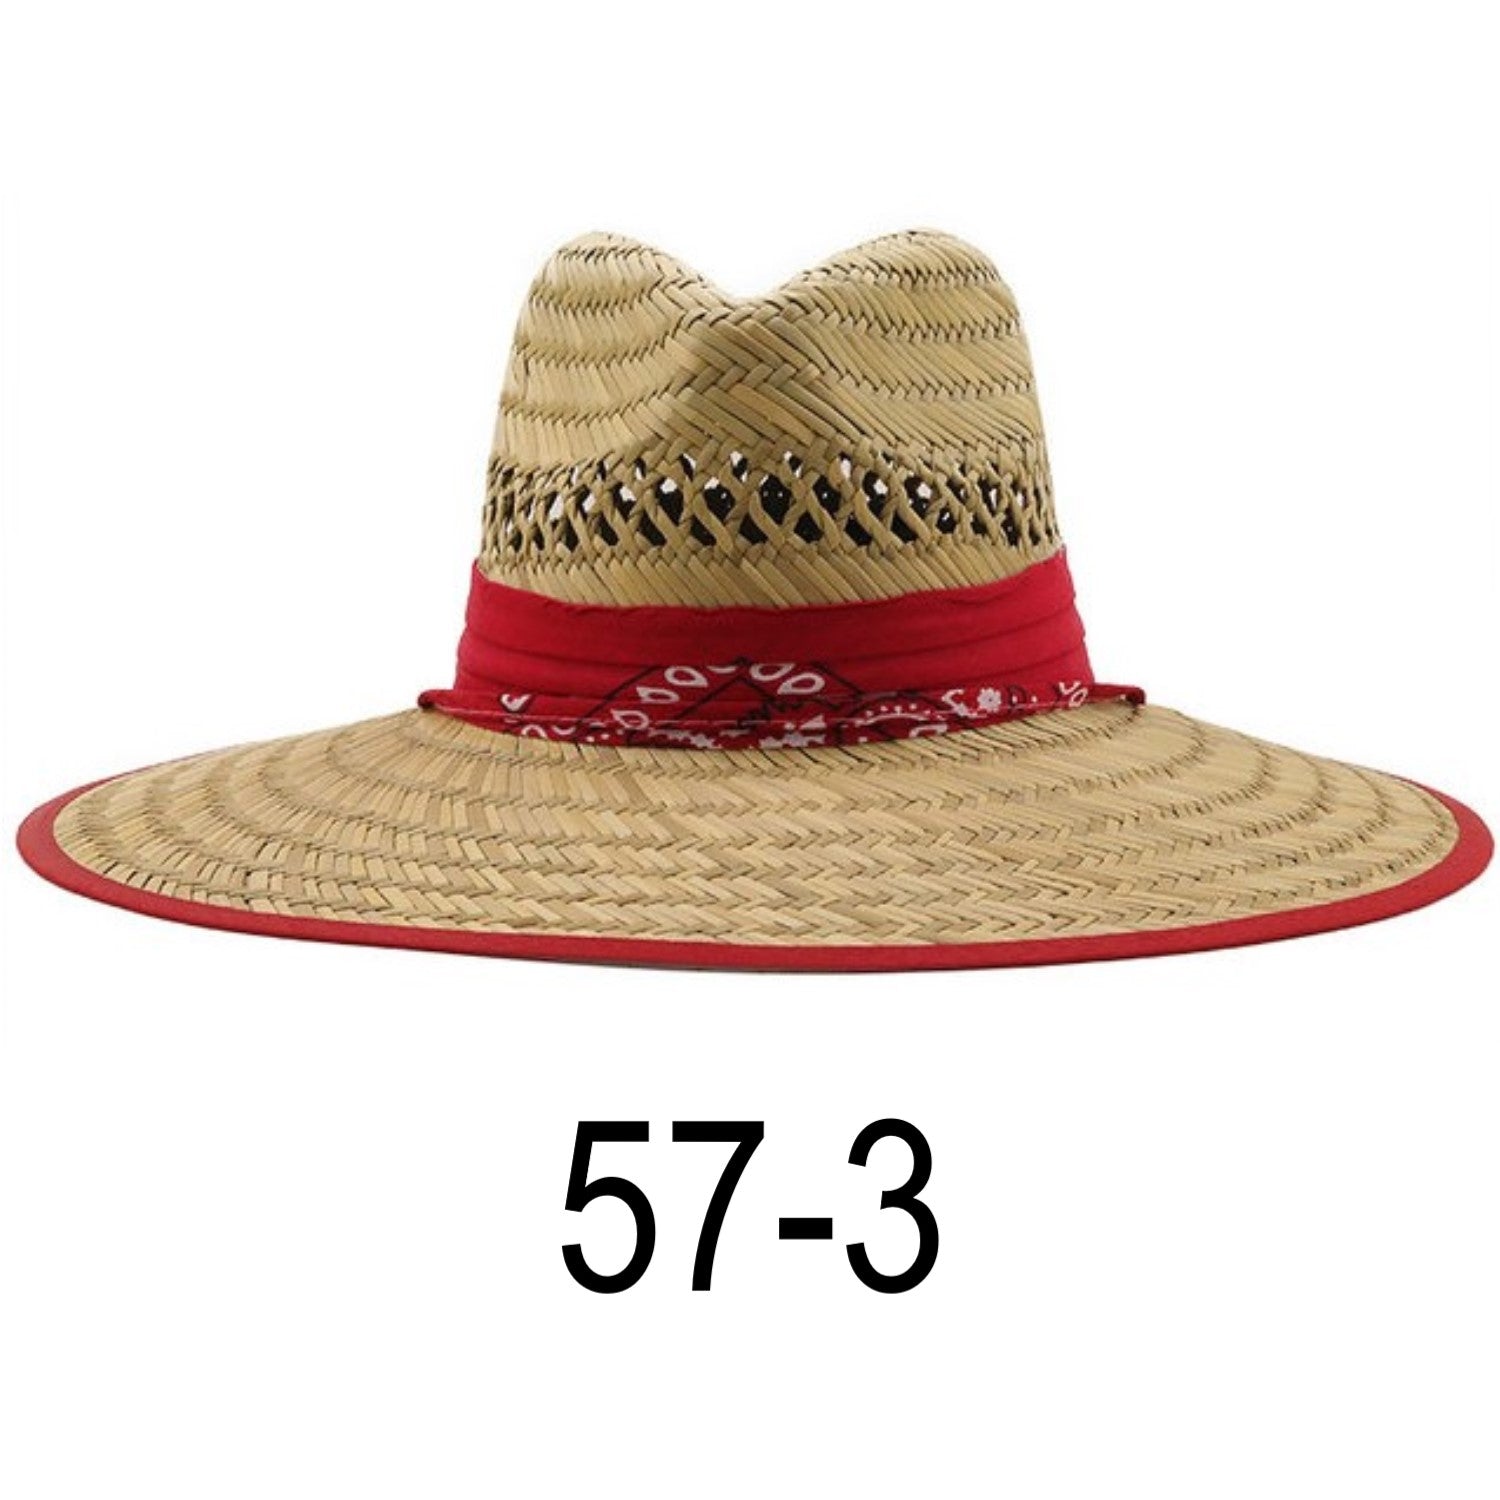 Red Straw Hat / Sun Hat / Wide Brim Summer Lifeguard / Beach